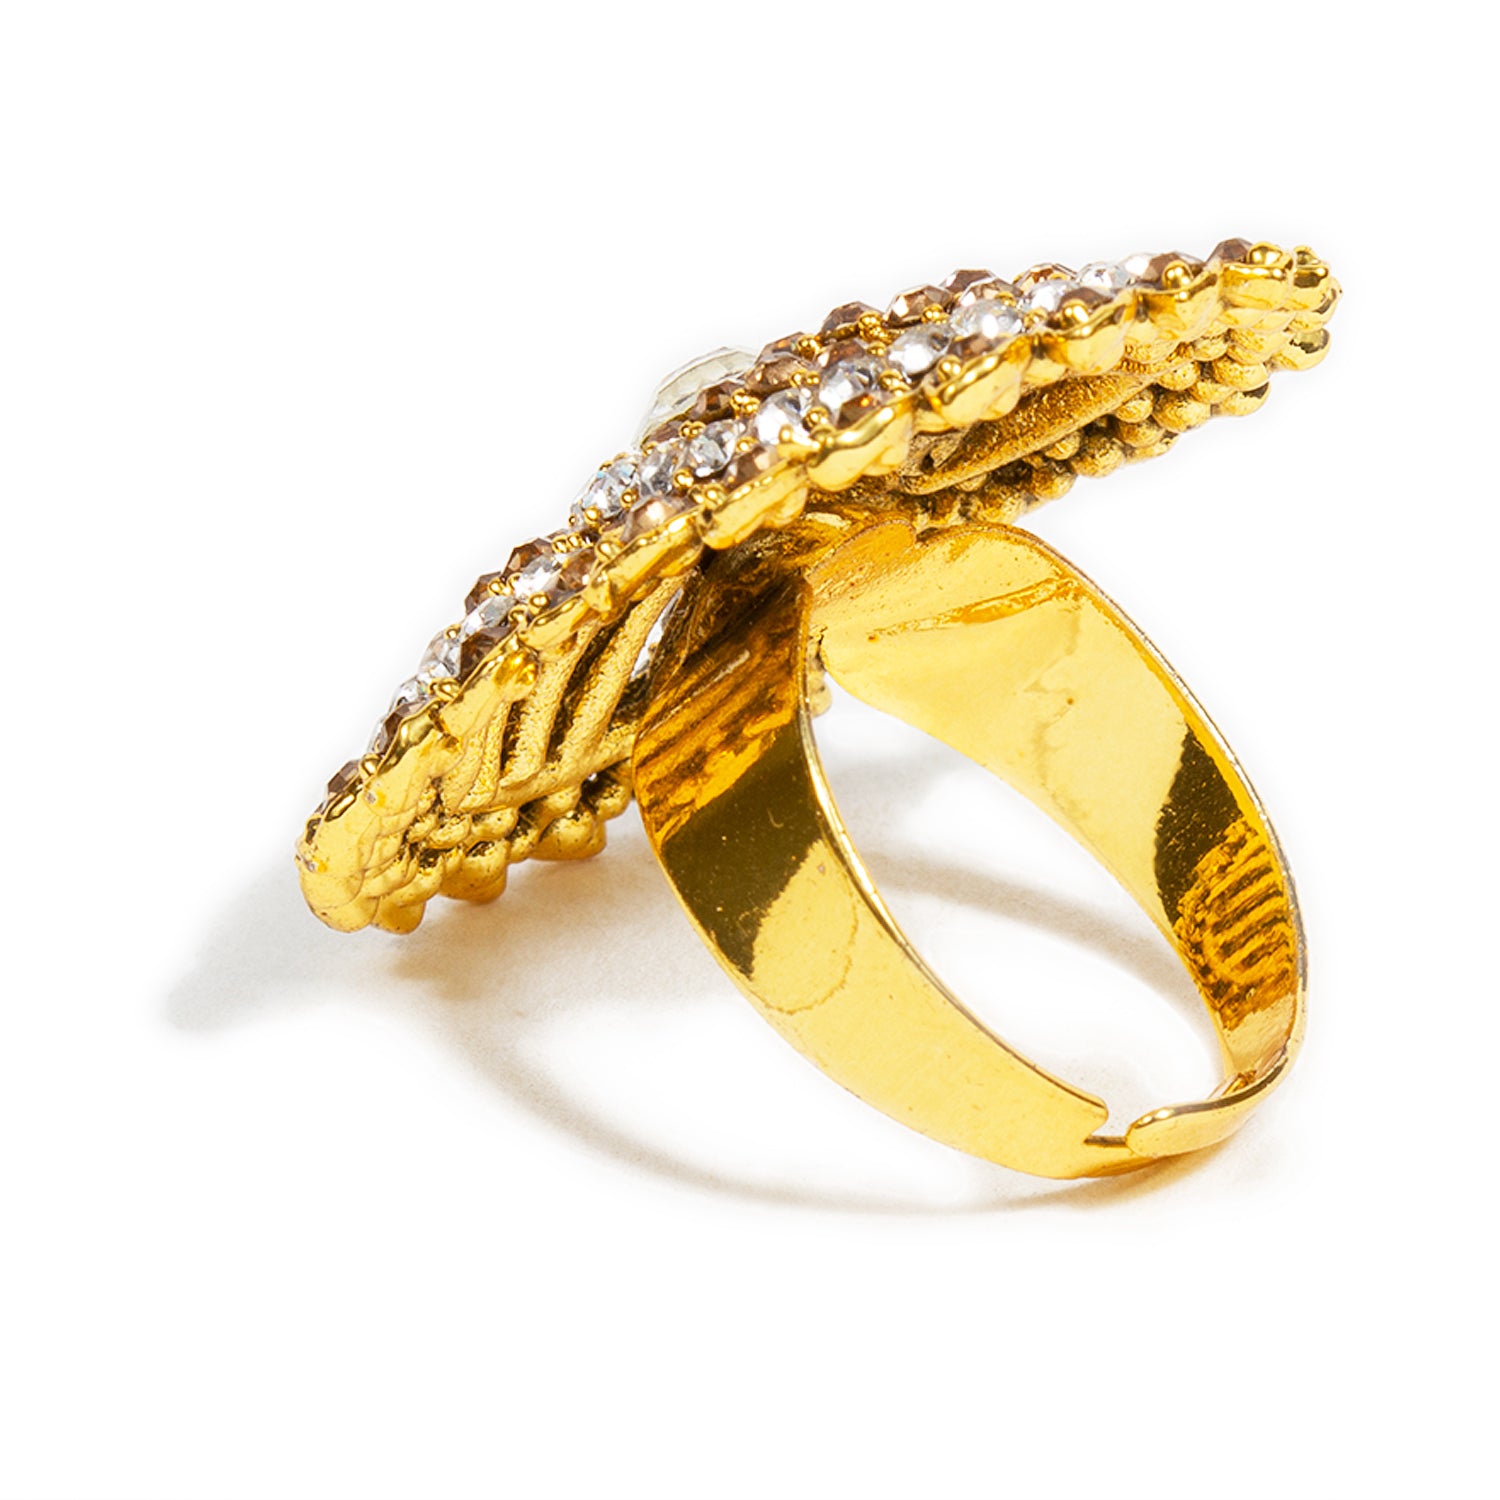 Buy quality 22 carat gold ladies finger rings RH-LR303 in Ahmedabad